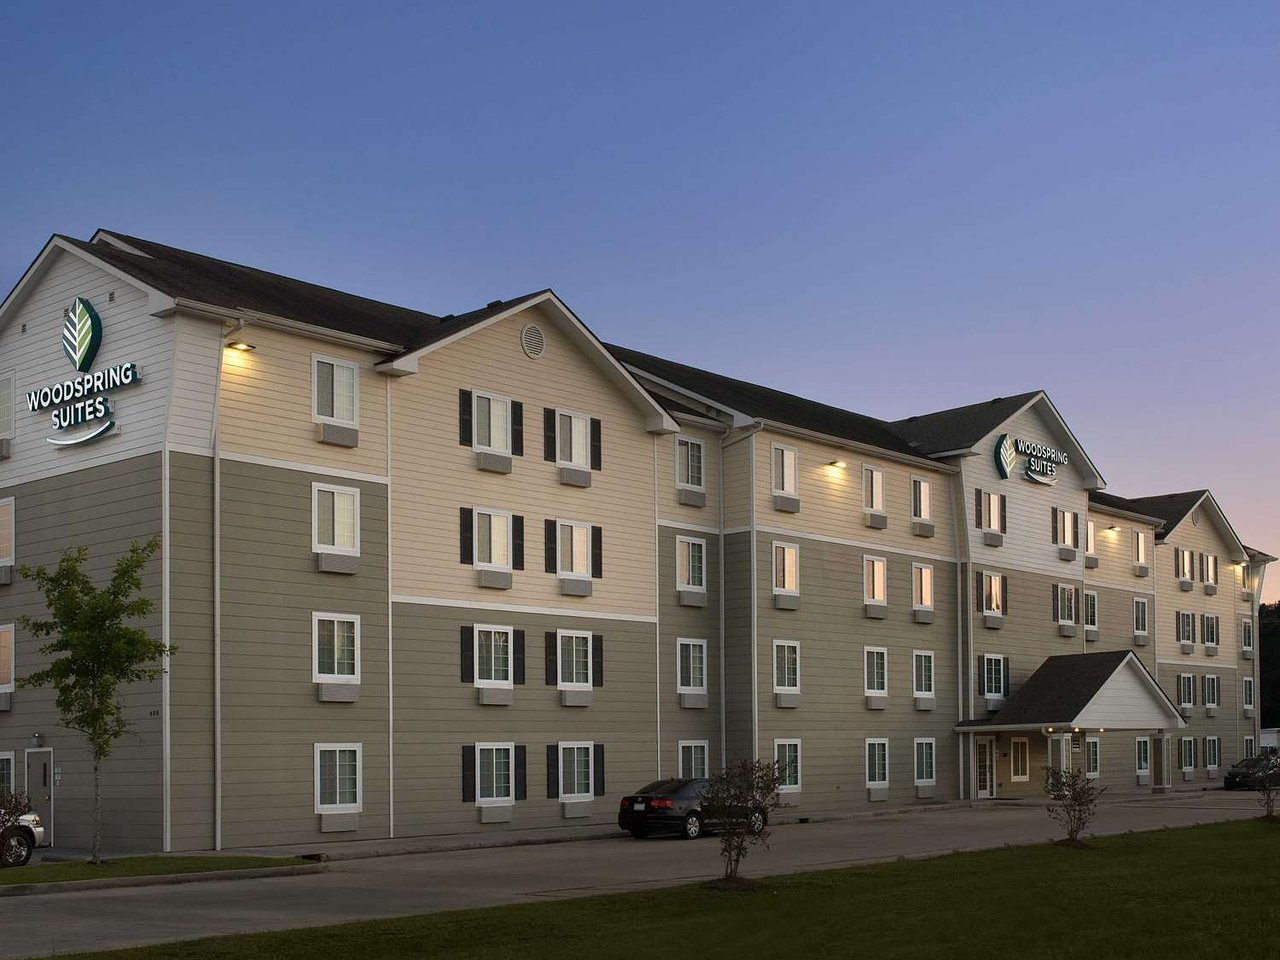 Photo of WoodSpring Suites Lynchburg, Lynchburg, VA